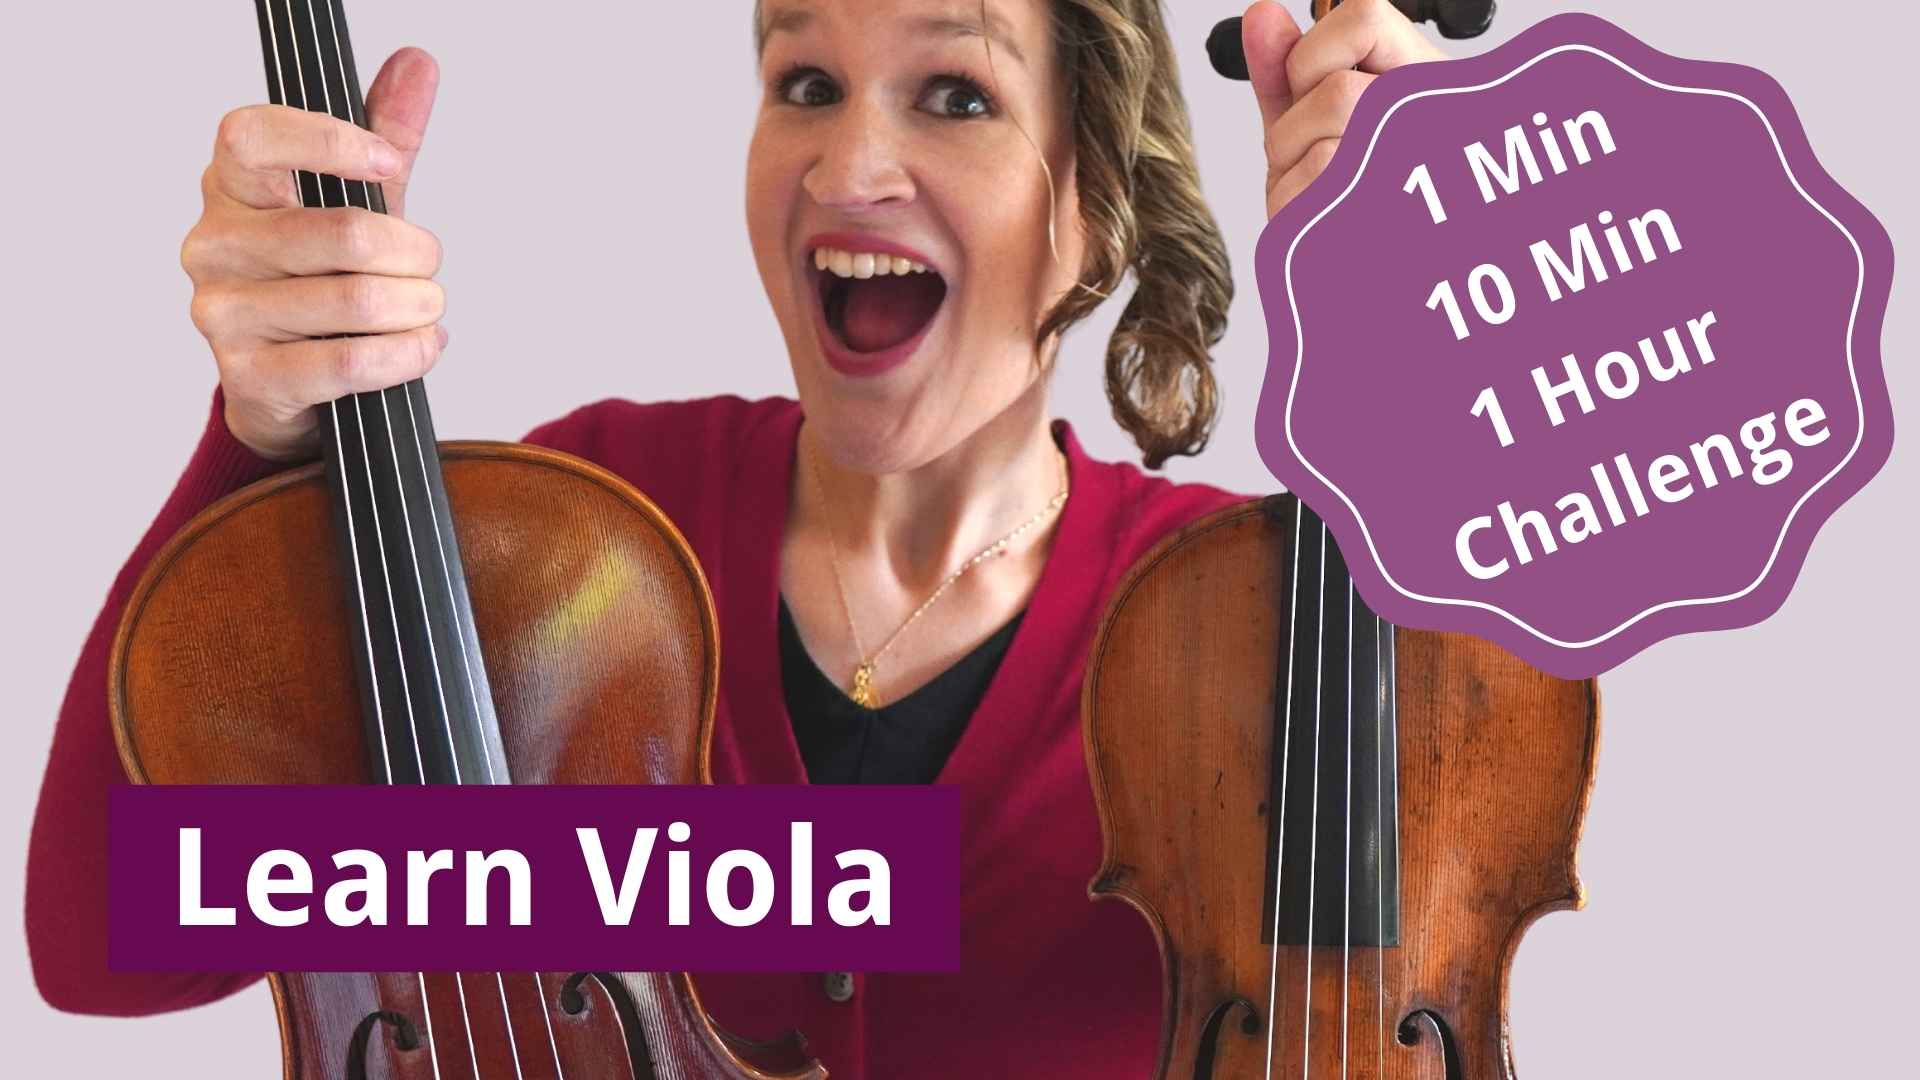 Play Viola As A Violinist 1 Min 10 Min 1 Hour Challenge Violin